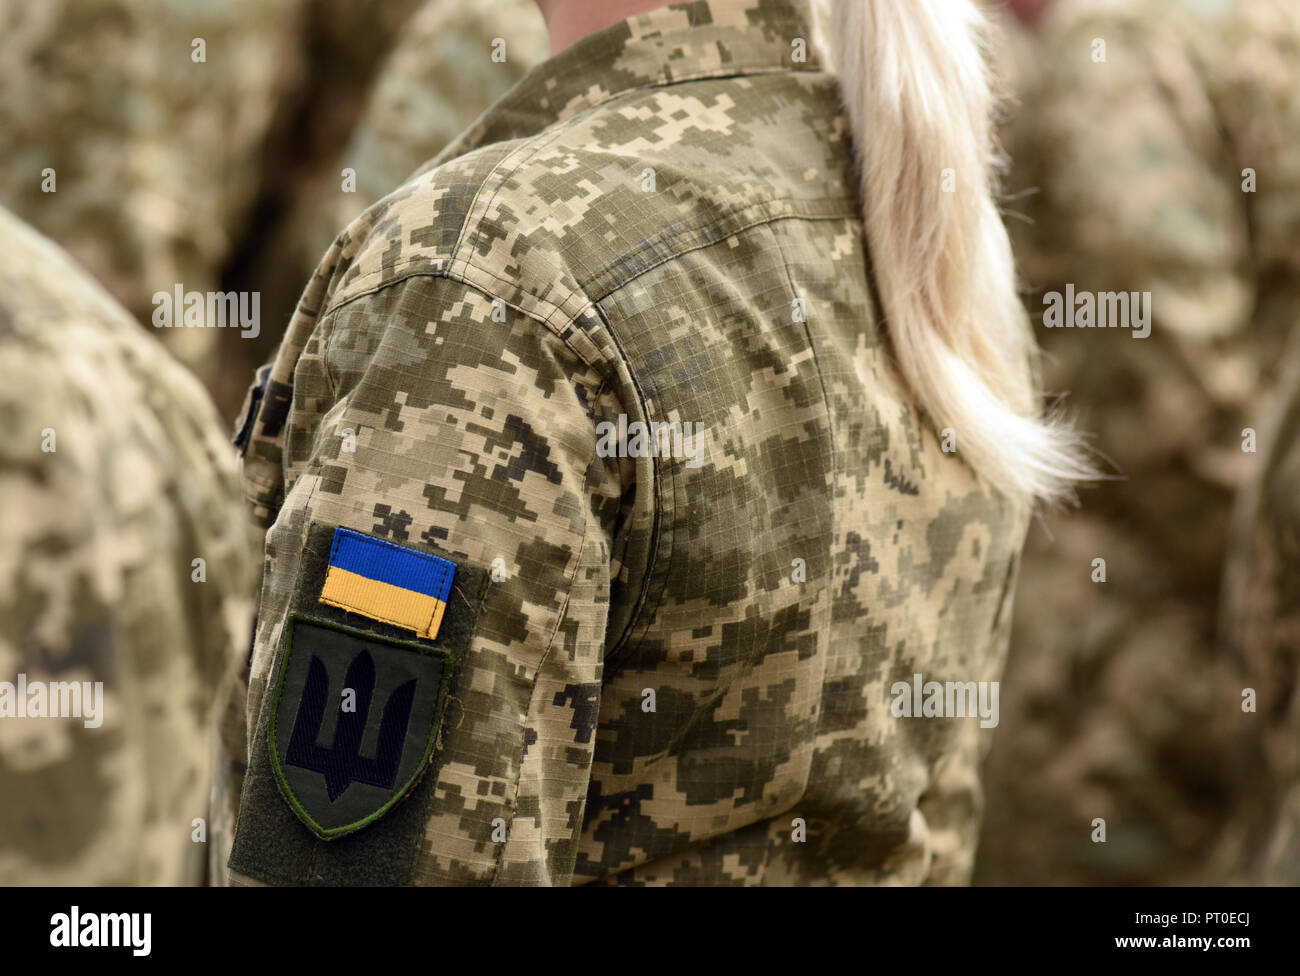 Woman soldier. Woman in army. Ukraine military uniform. Ukrainian troops Stock Photo